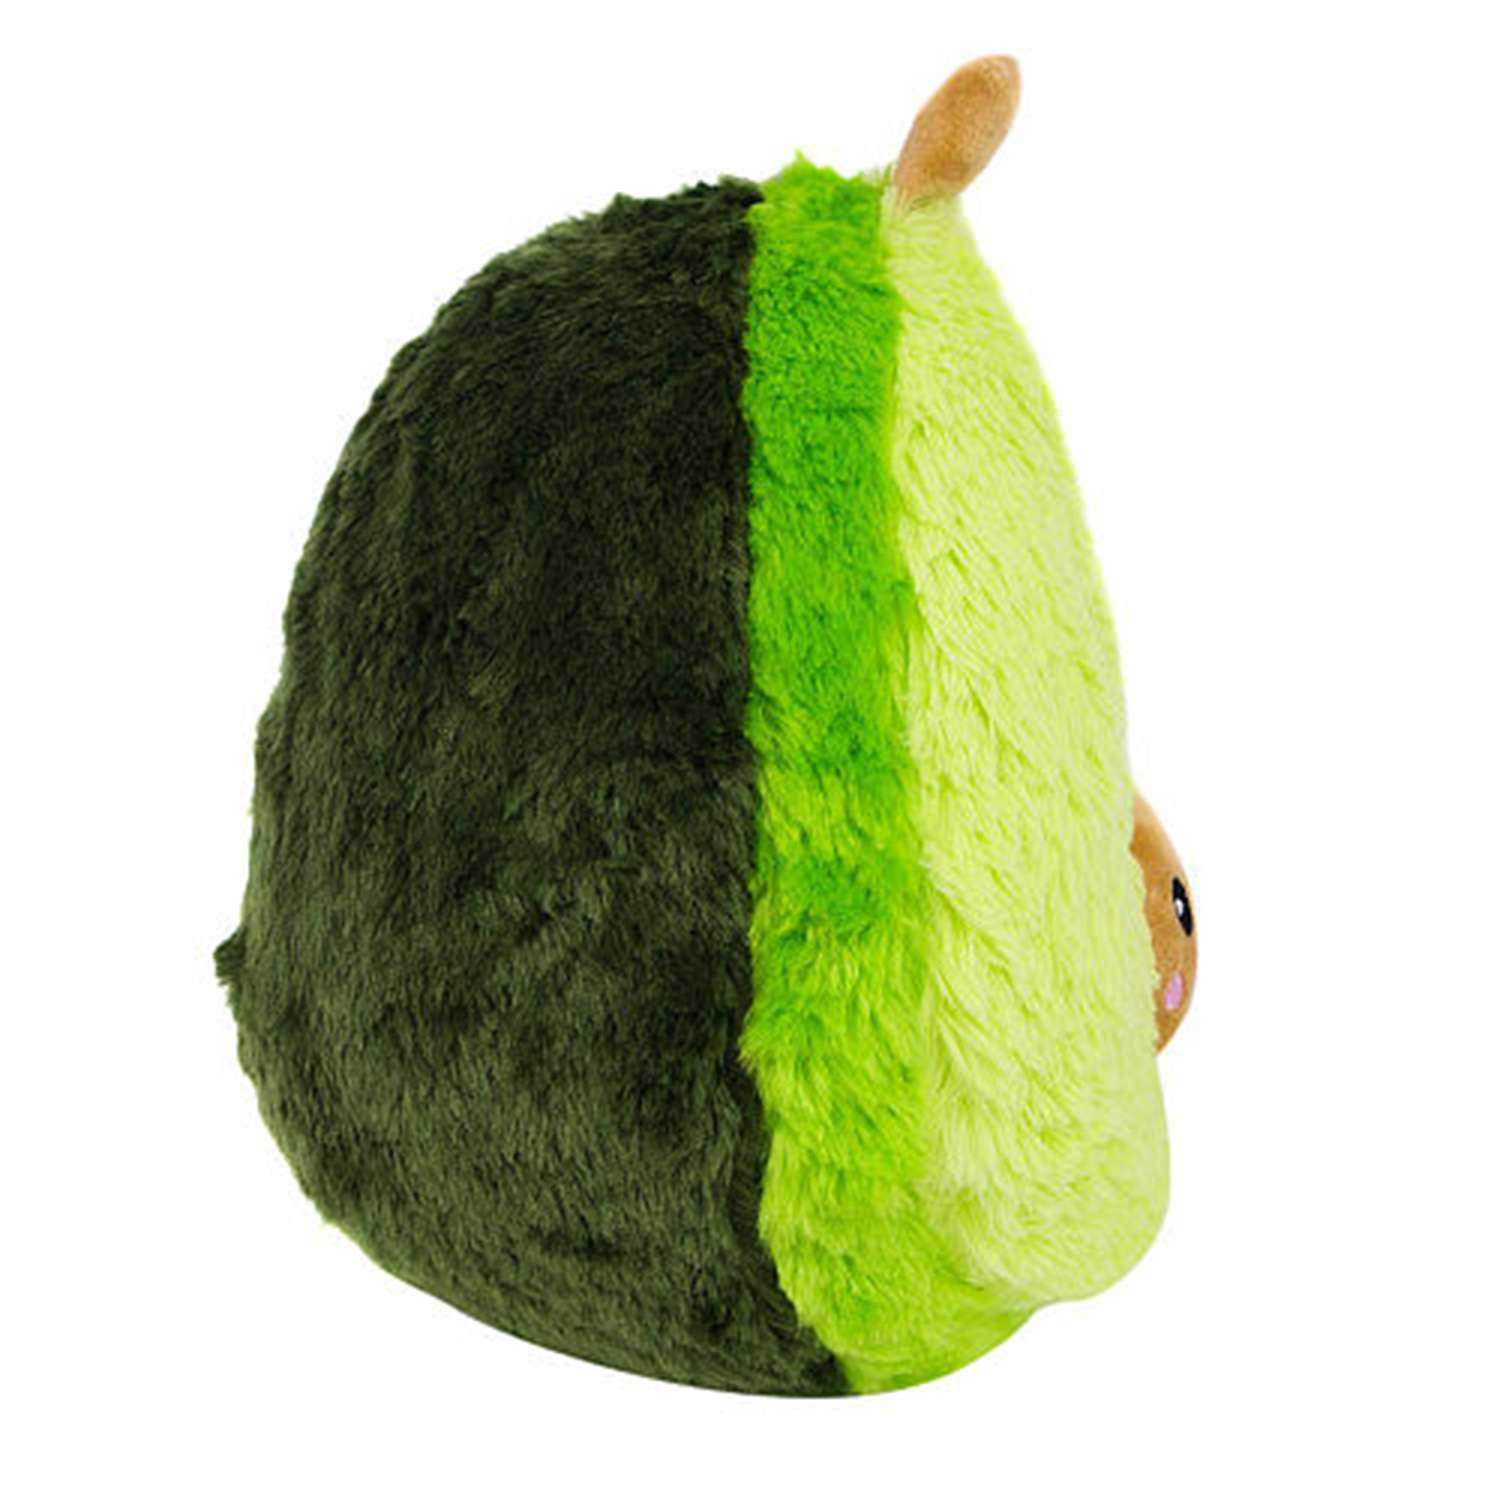 Мягкая игрушка Super01 Авокадо темно-зеленое 20 см - фото 2